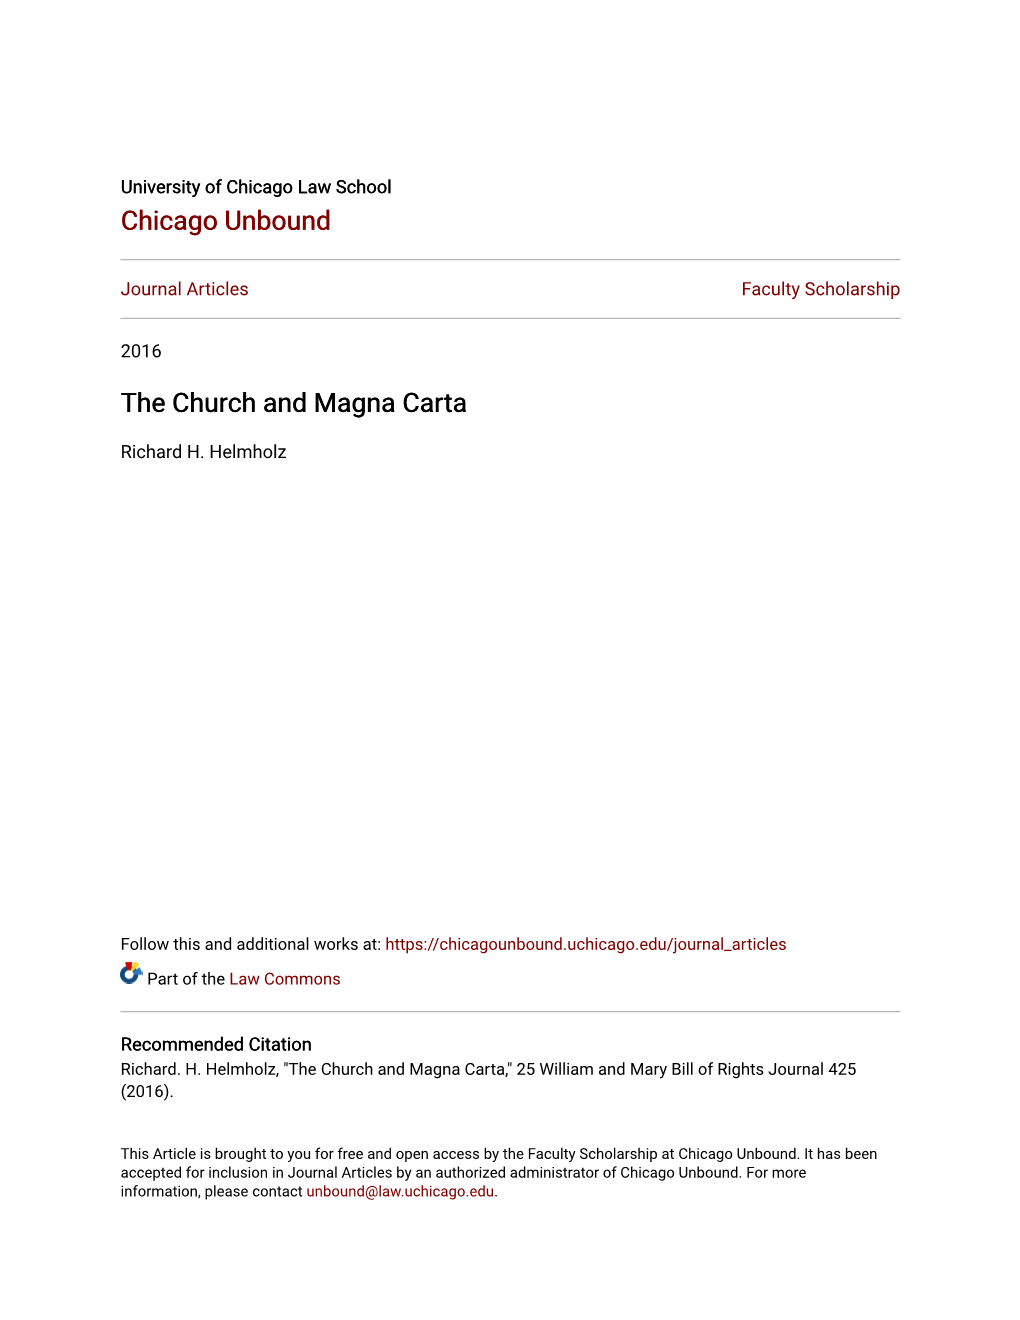 The Church and Magna Carta